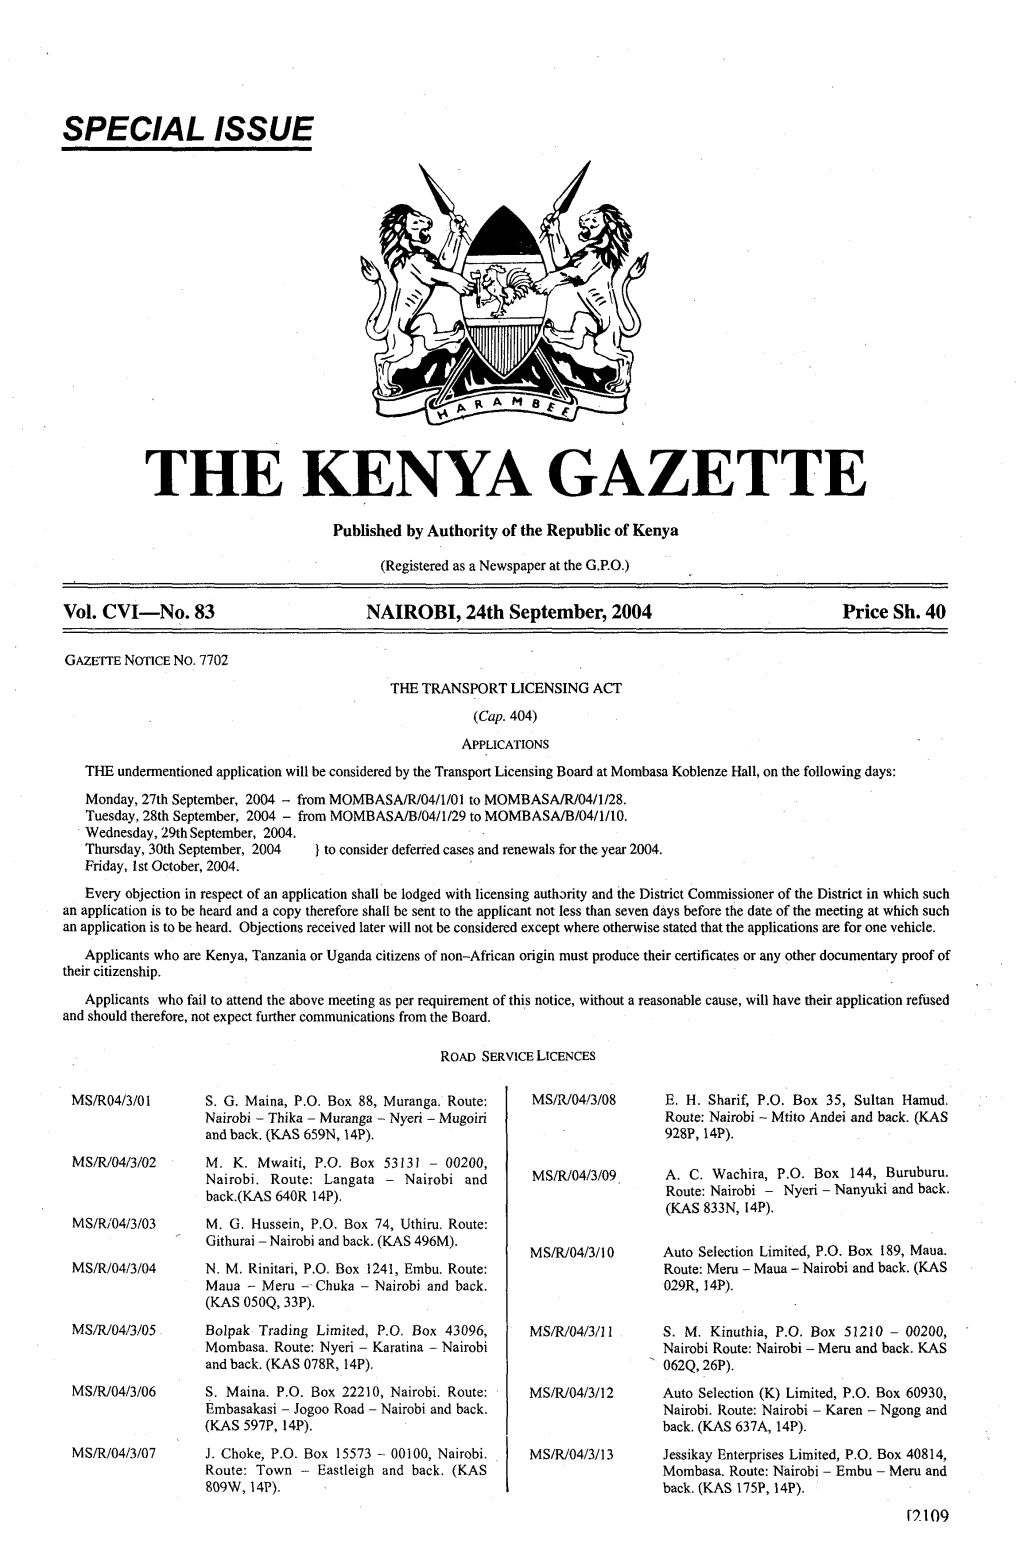 The K:Nya Gazette